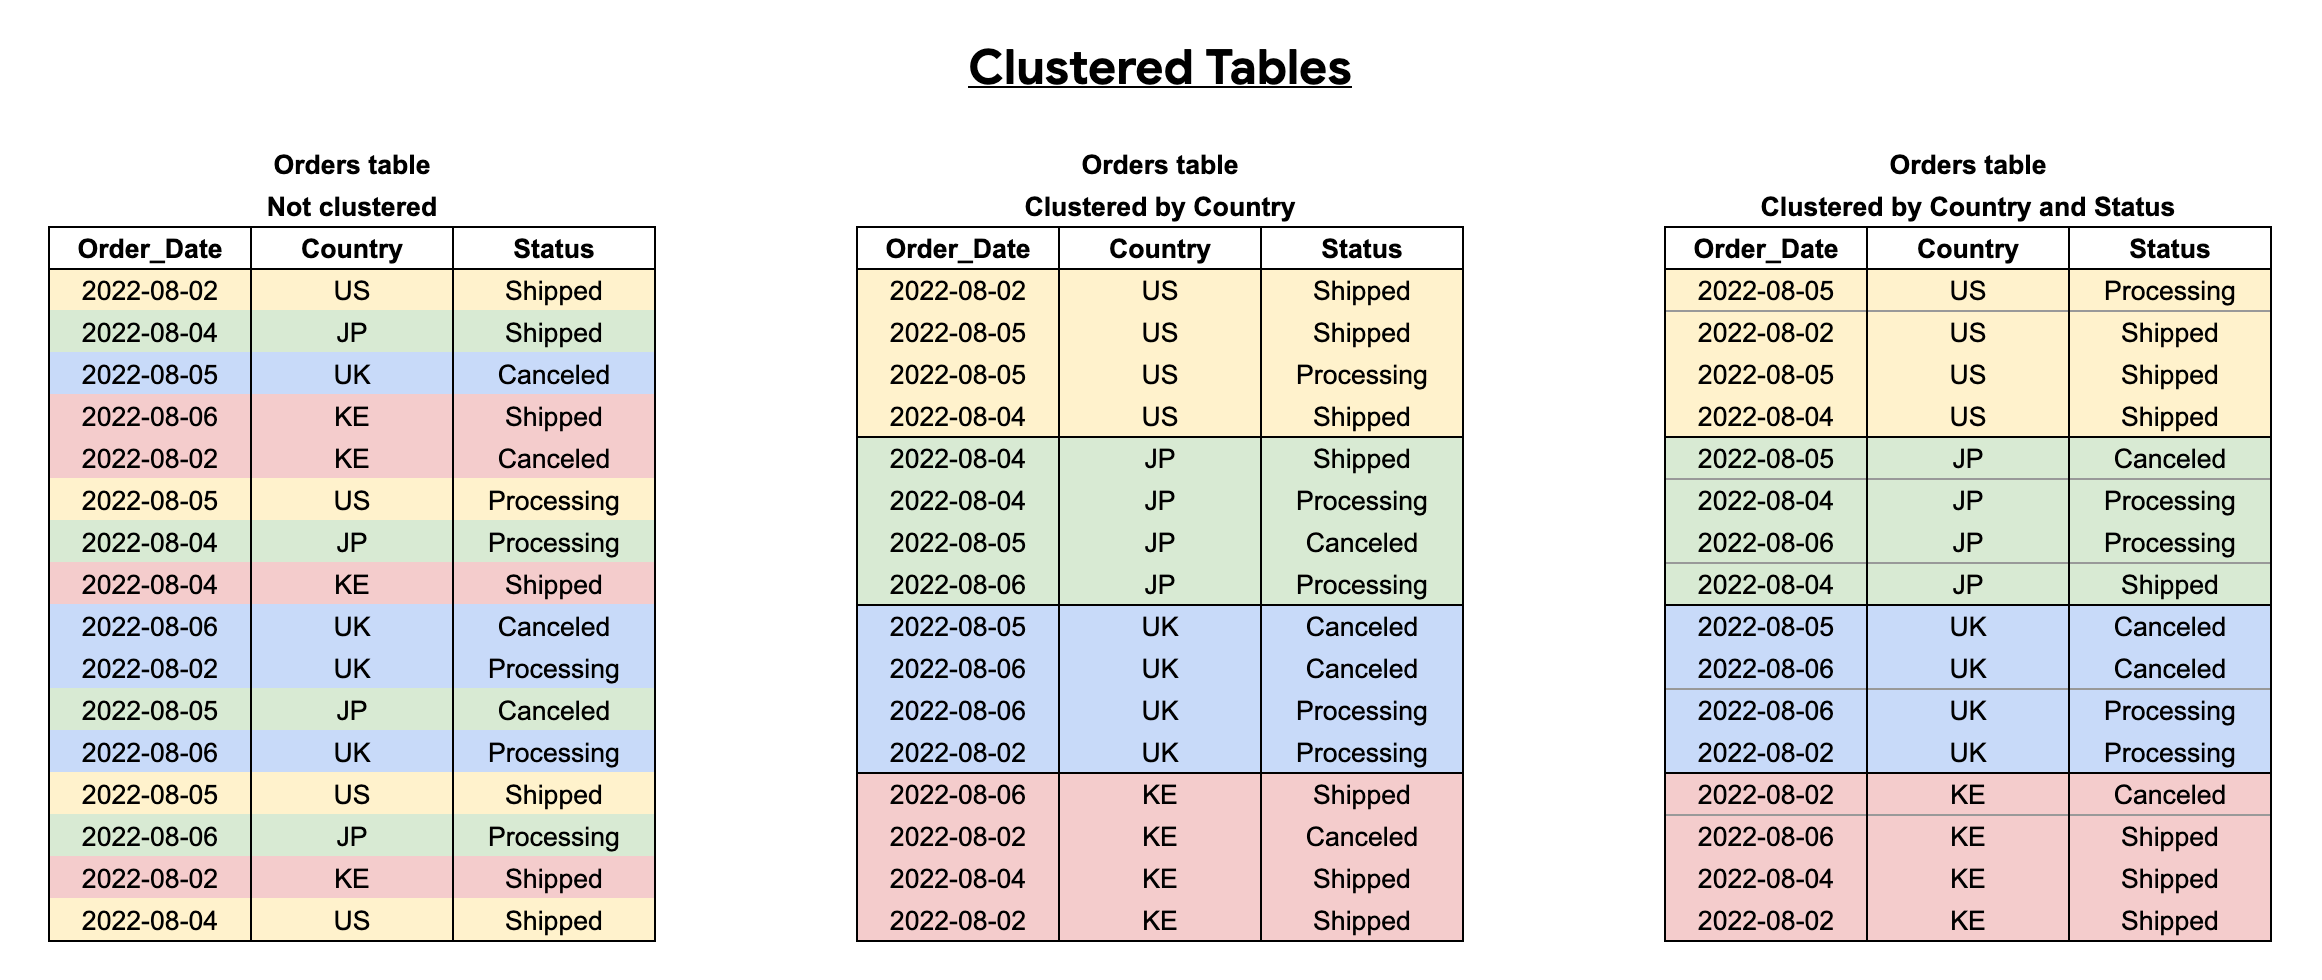 BigQuery는 쿼리 성능을 개선하기 위해 클러스터링된 테이블의 데이터를 정렬합니다.